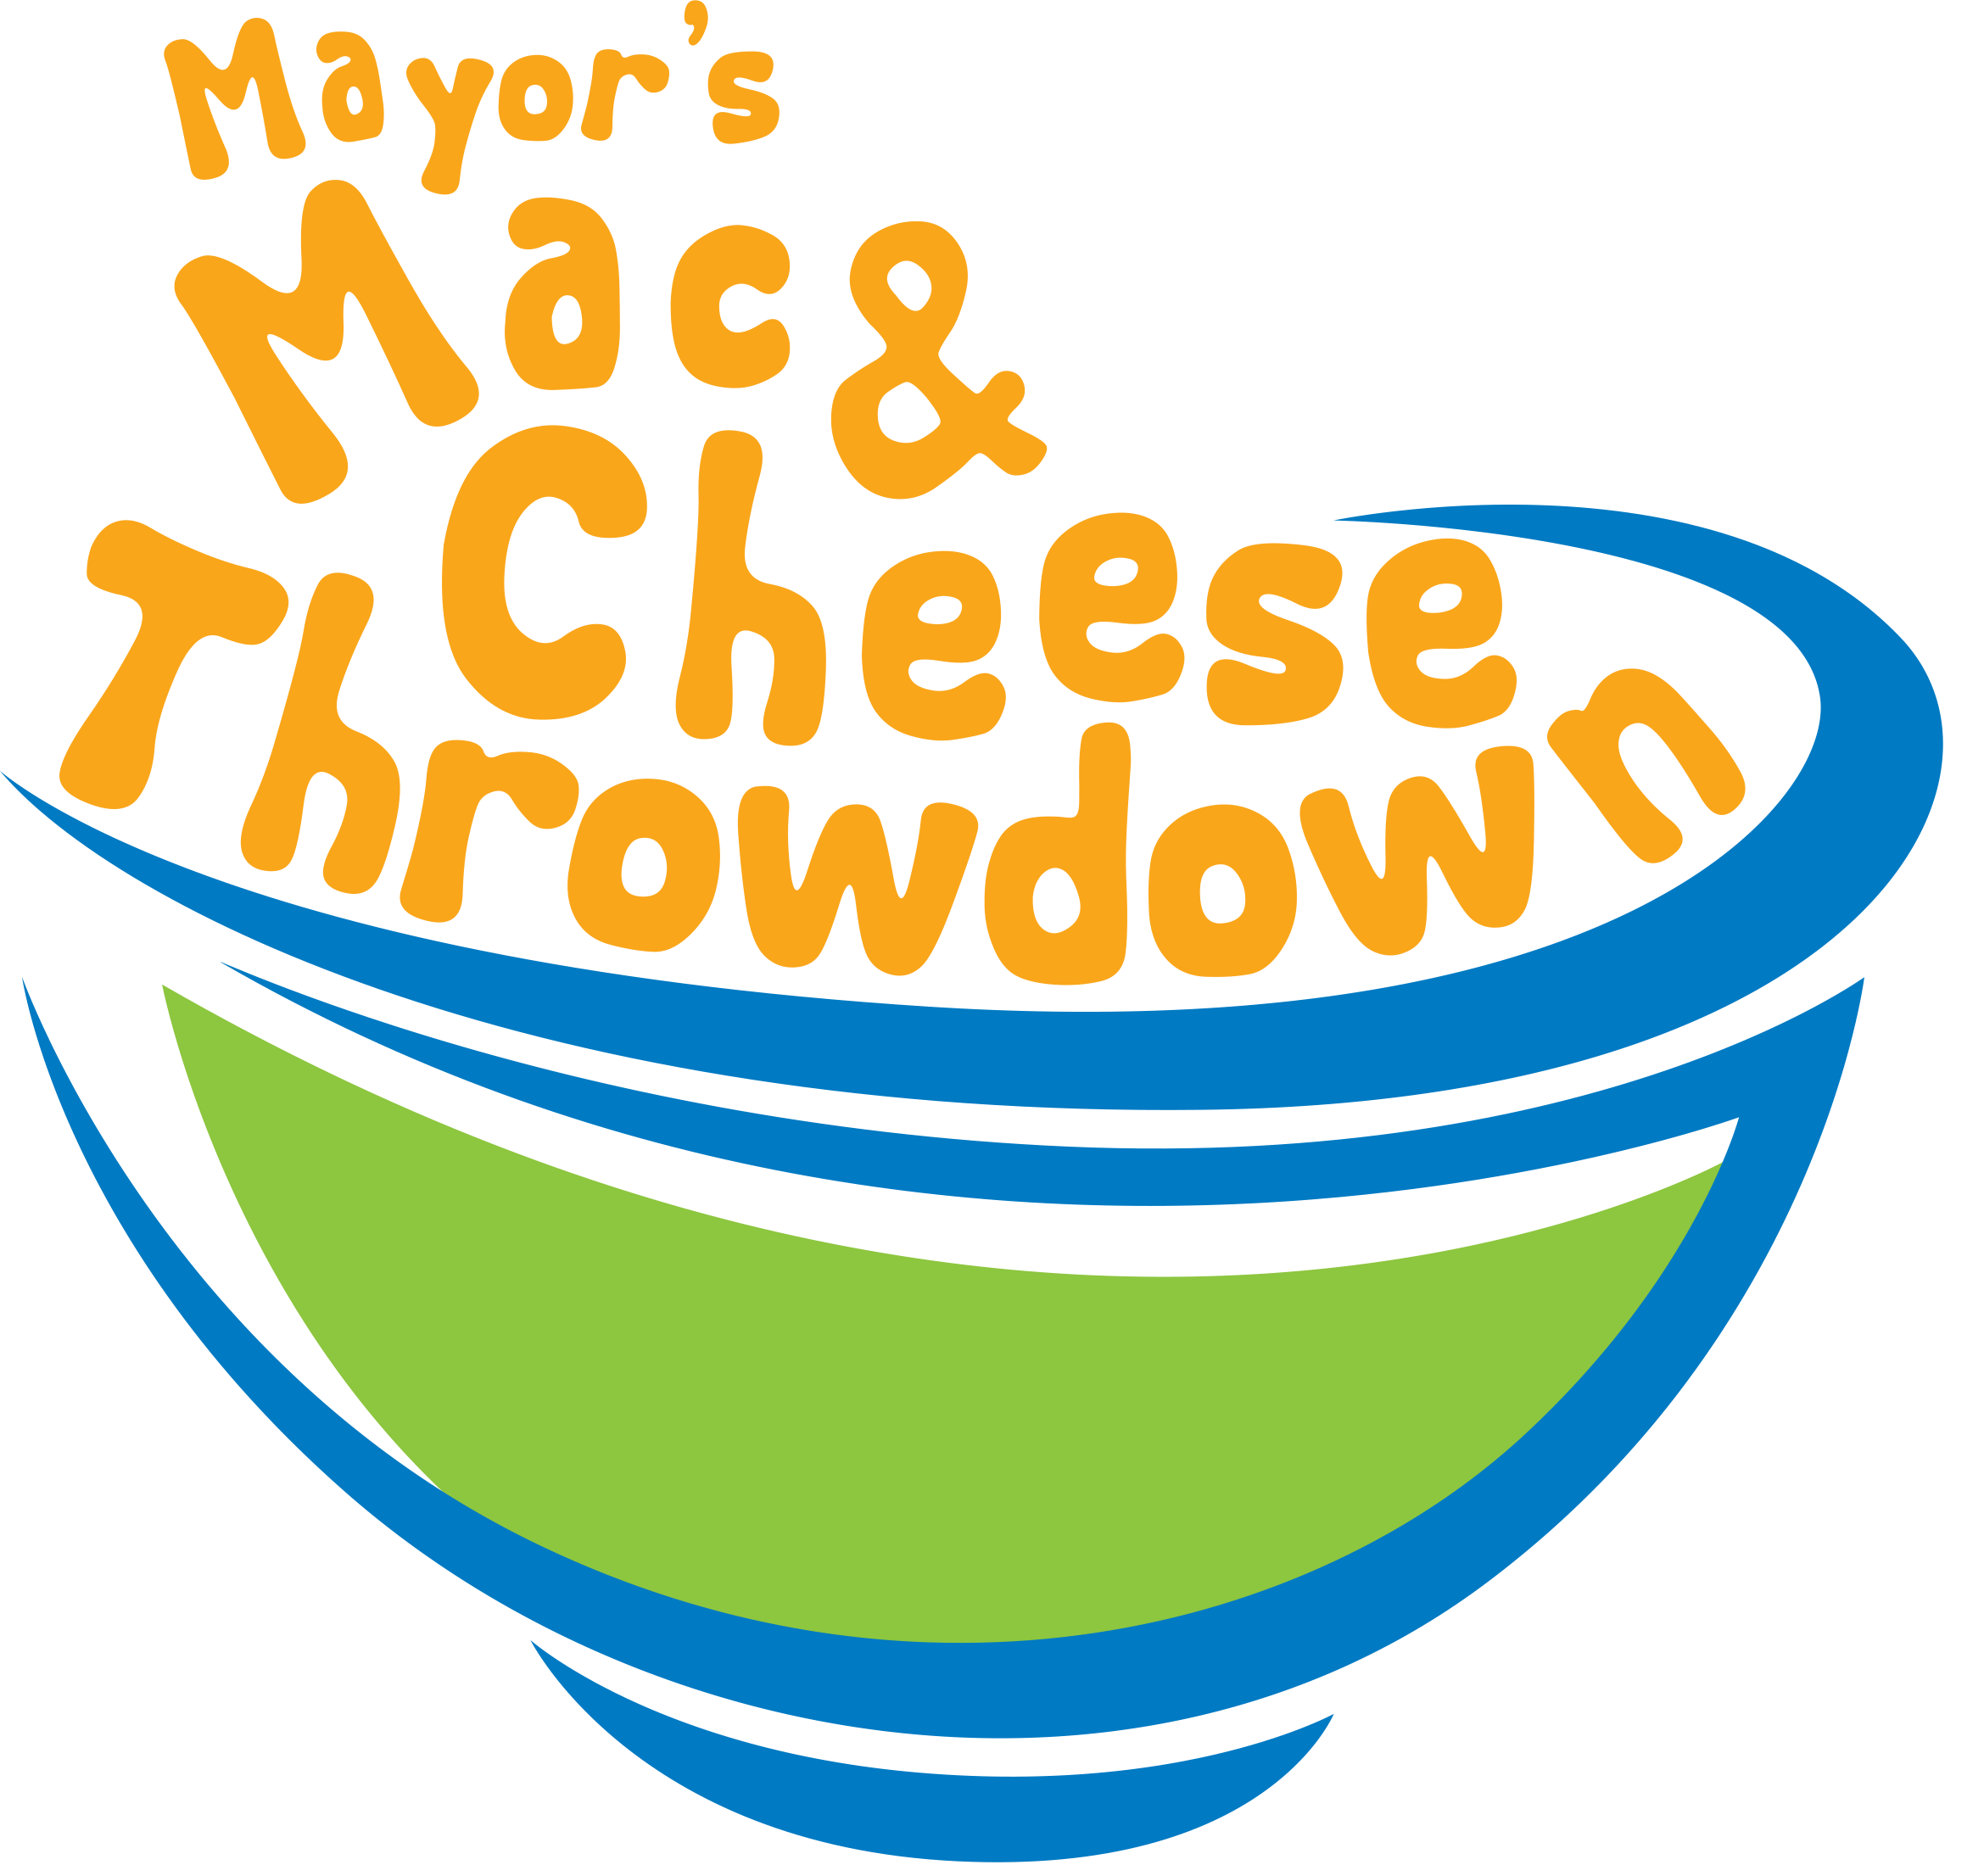 Mayors Mac & Cheese Throwdown Logo.png